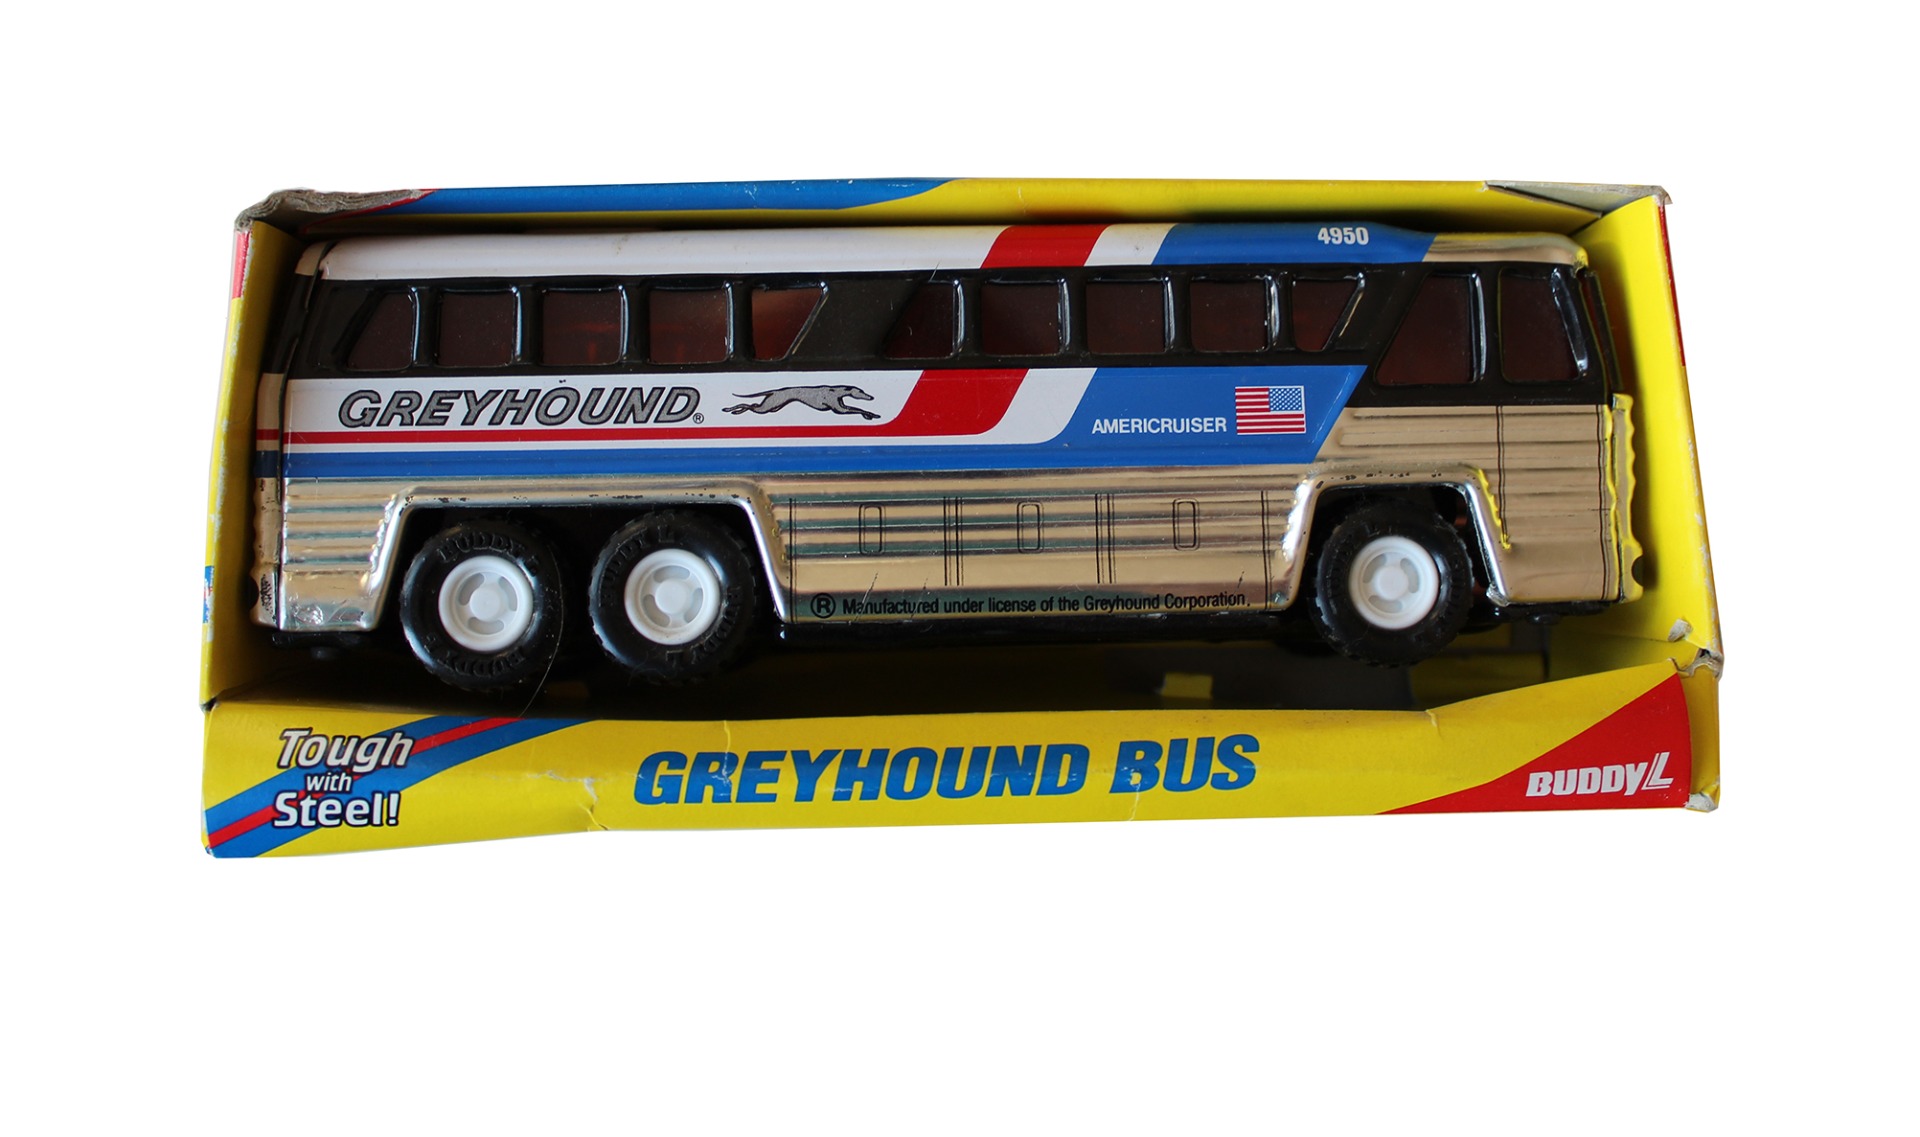 BUDDY L - AMERICRUISER - GREYHOUND BUS VINTAGE 1989